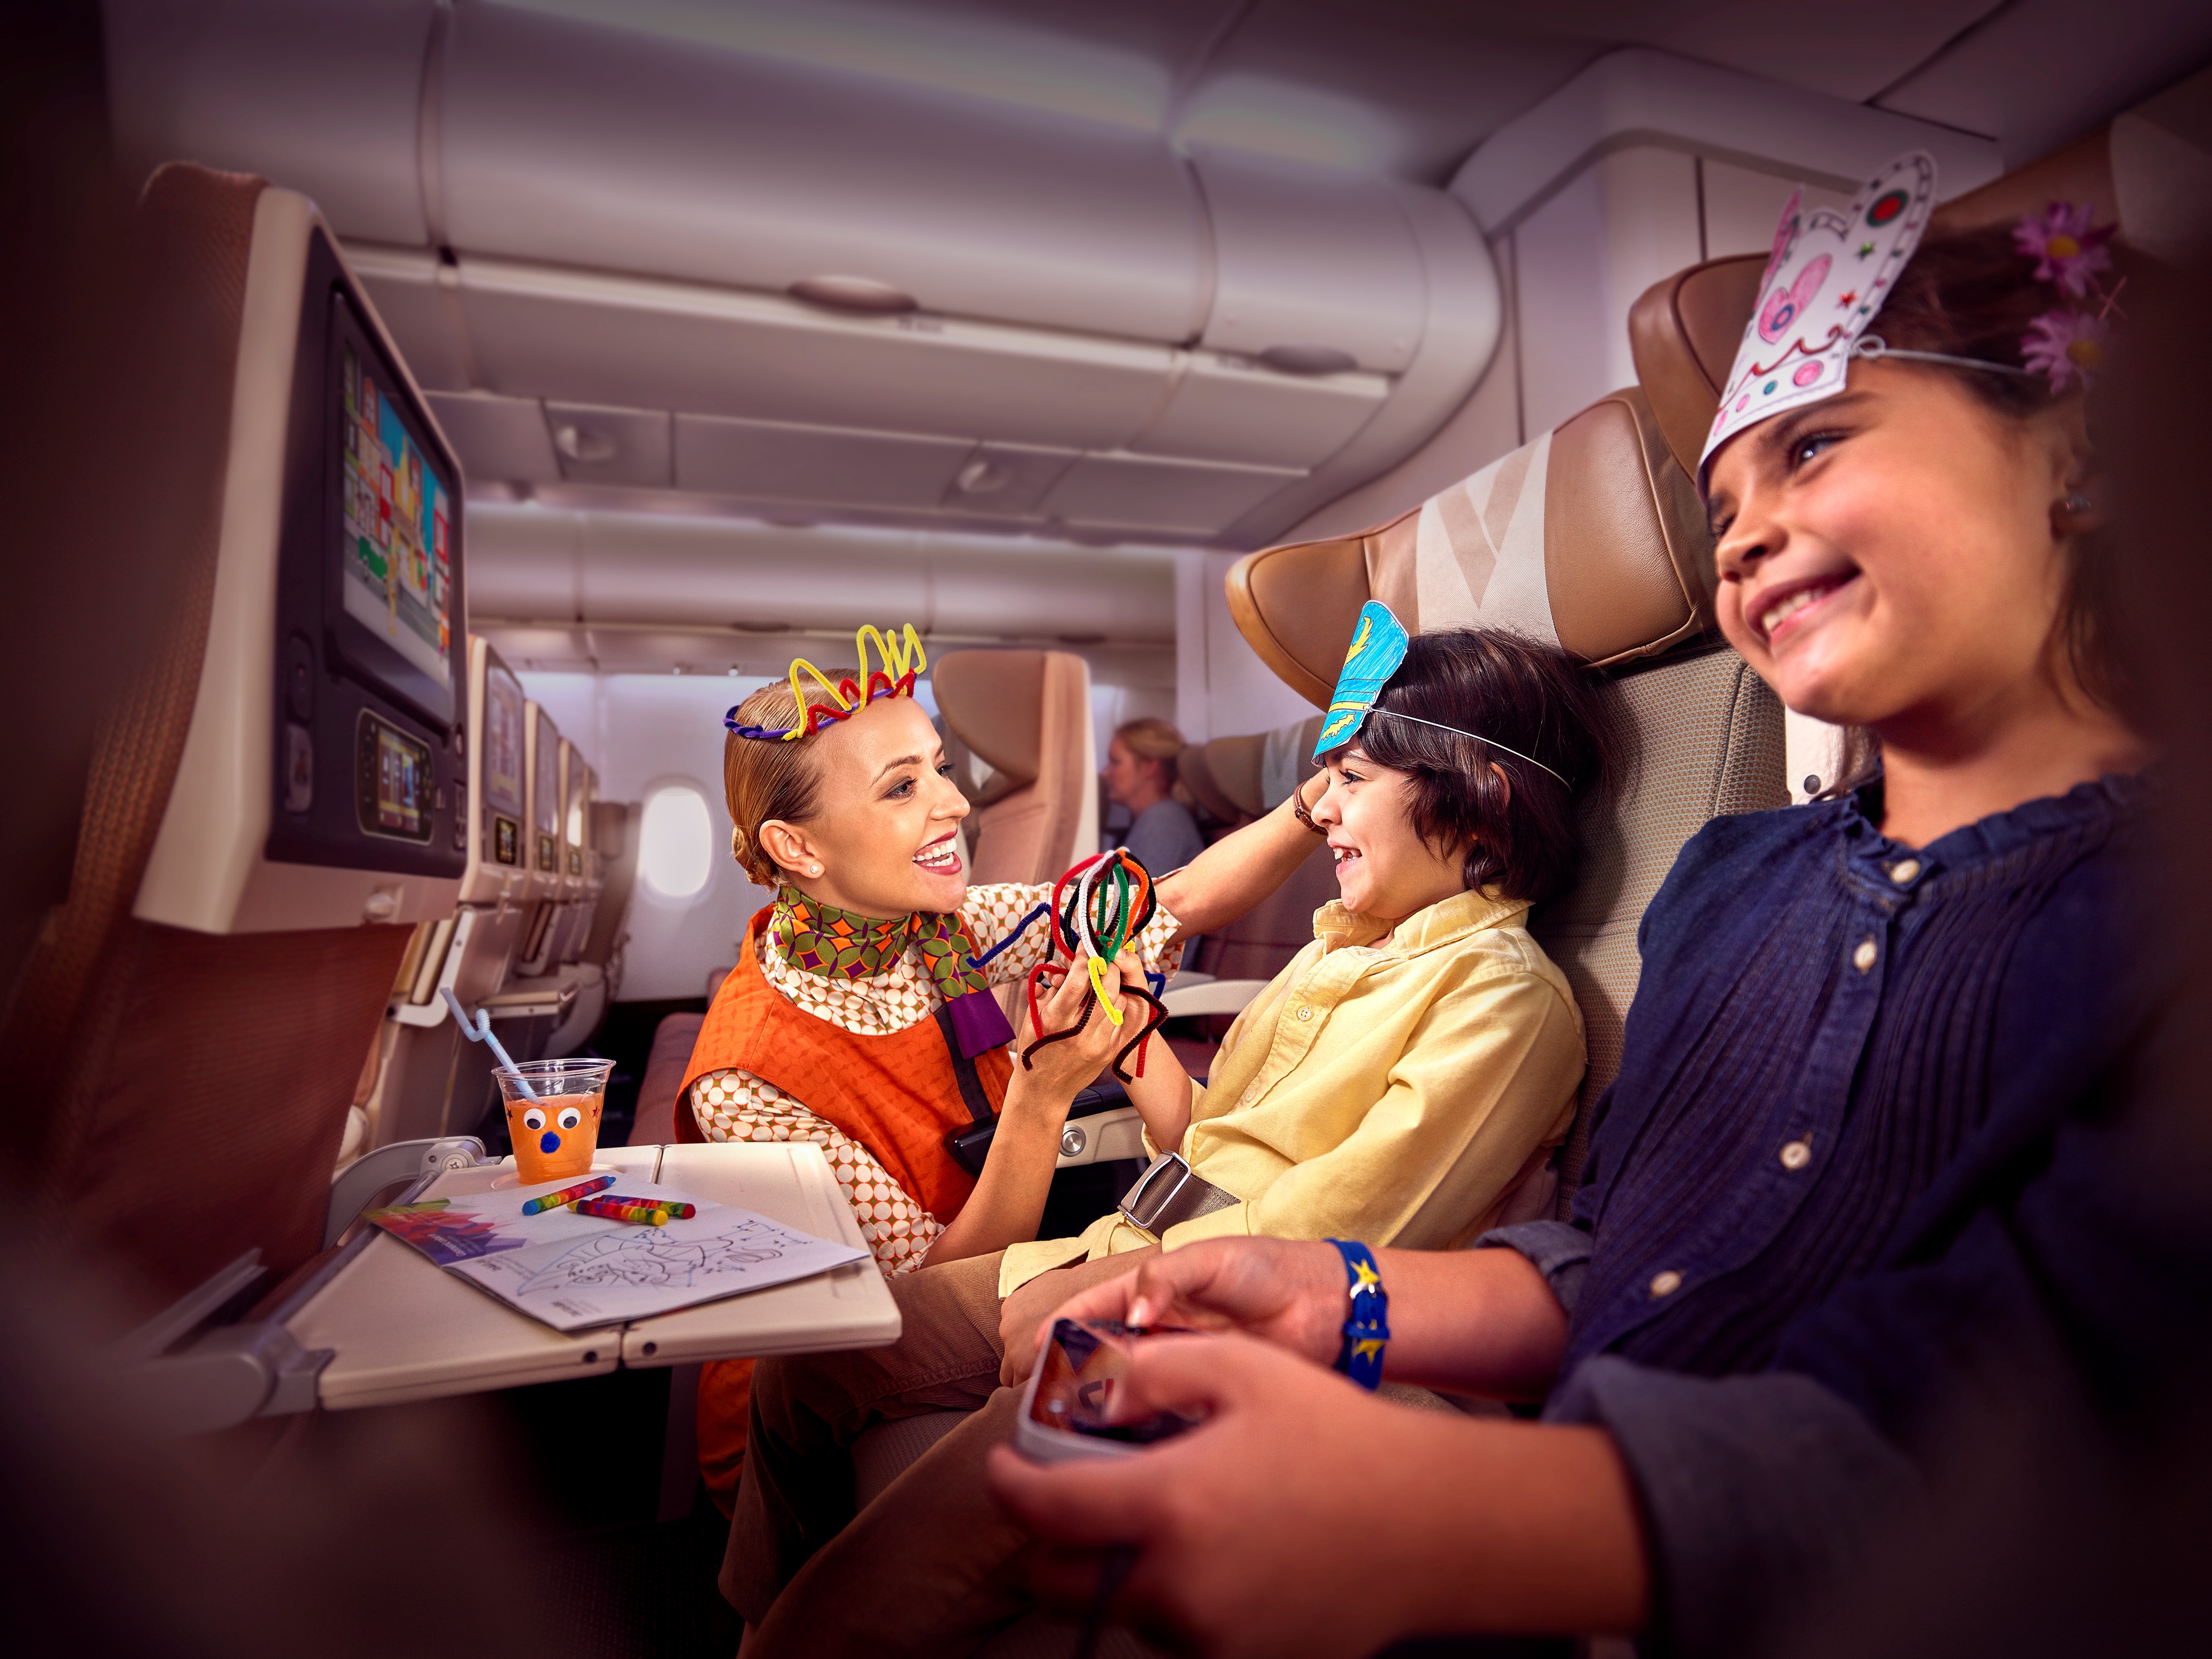 Дети на борту самолета. Etihad Airways няня на борту. Etihad Airways авиакомпании ОАЭ. Подарки детям в самолет. Самолет для детей.